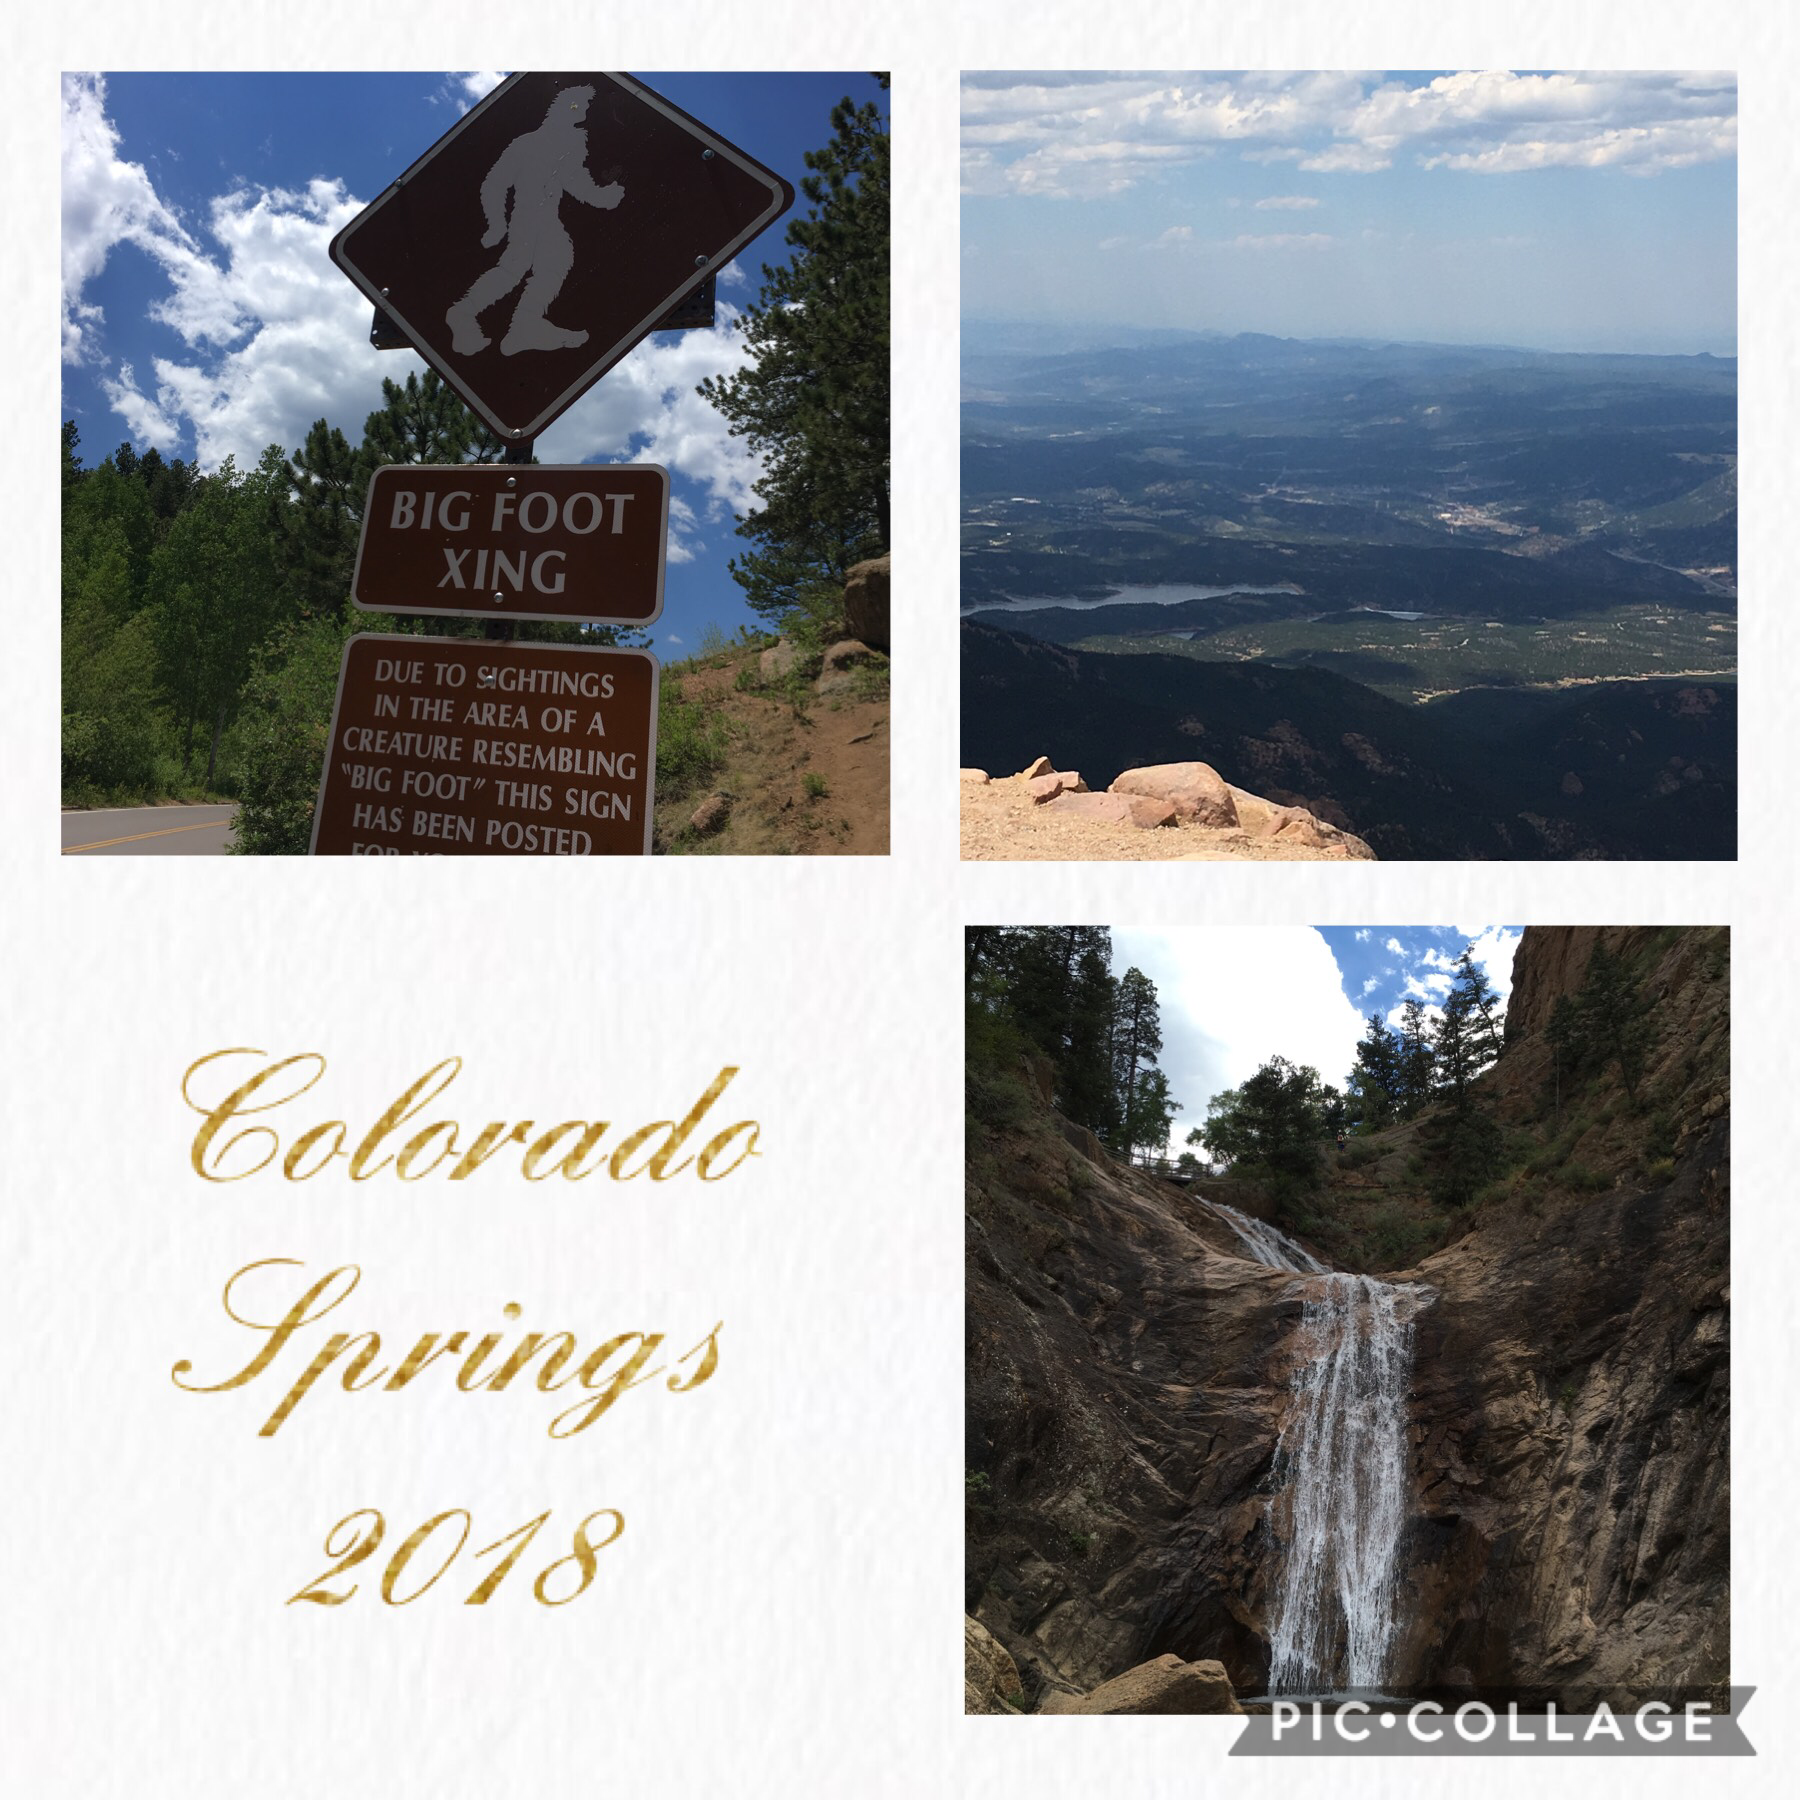 Colorado Springs, 2018
Had such a fun time